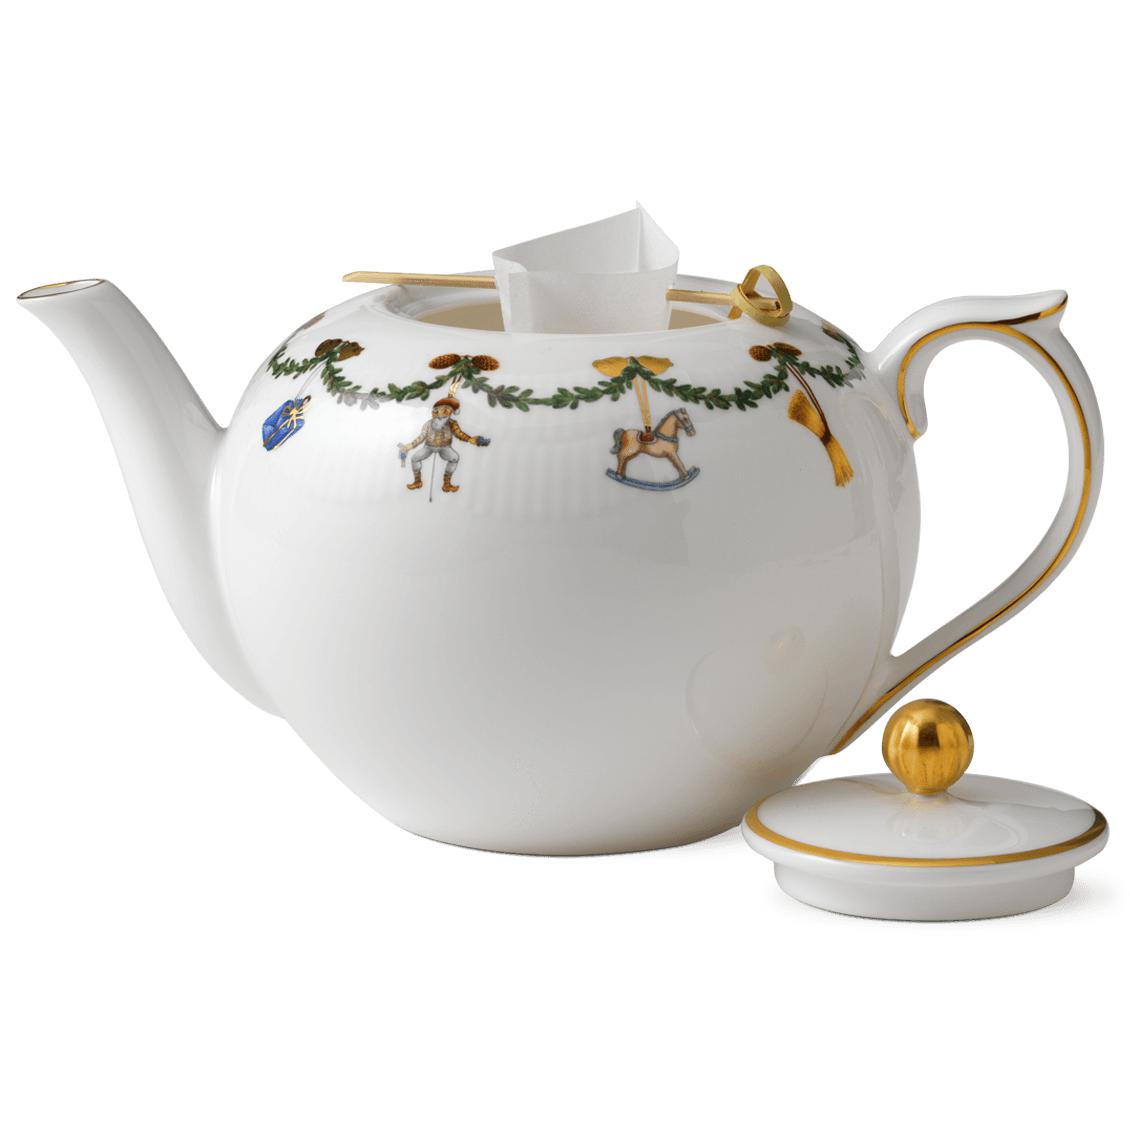 Royal Copenhagen Star Fluted Christmas Teapot